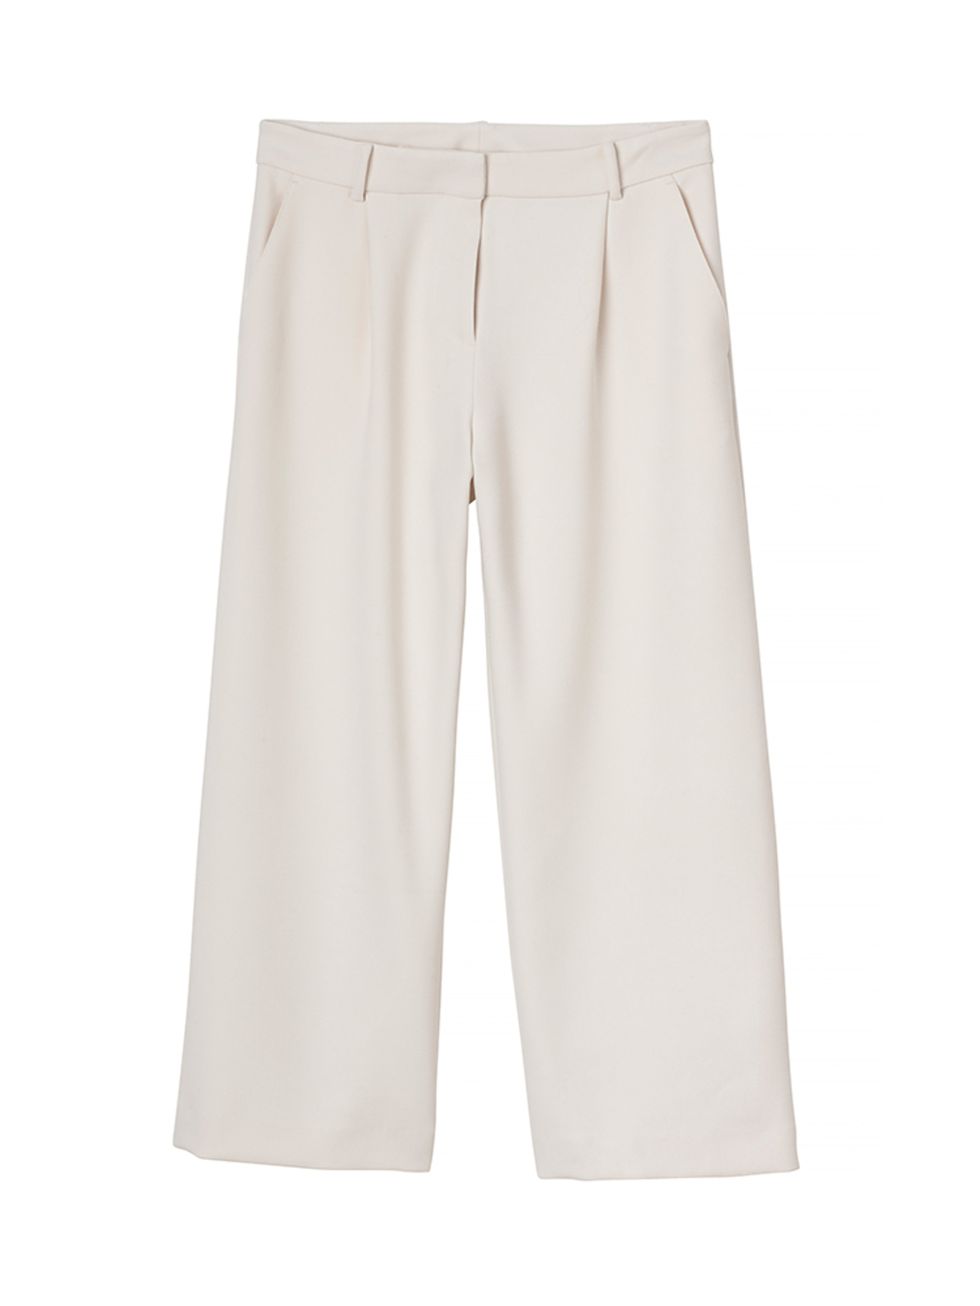 <p>Trousers, £30, <a href="http://www.monki.com/gb/Trousers/Randy_trousers/14046513-14072689.1#c-49929" target="_blank">Monki</a></p>